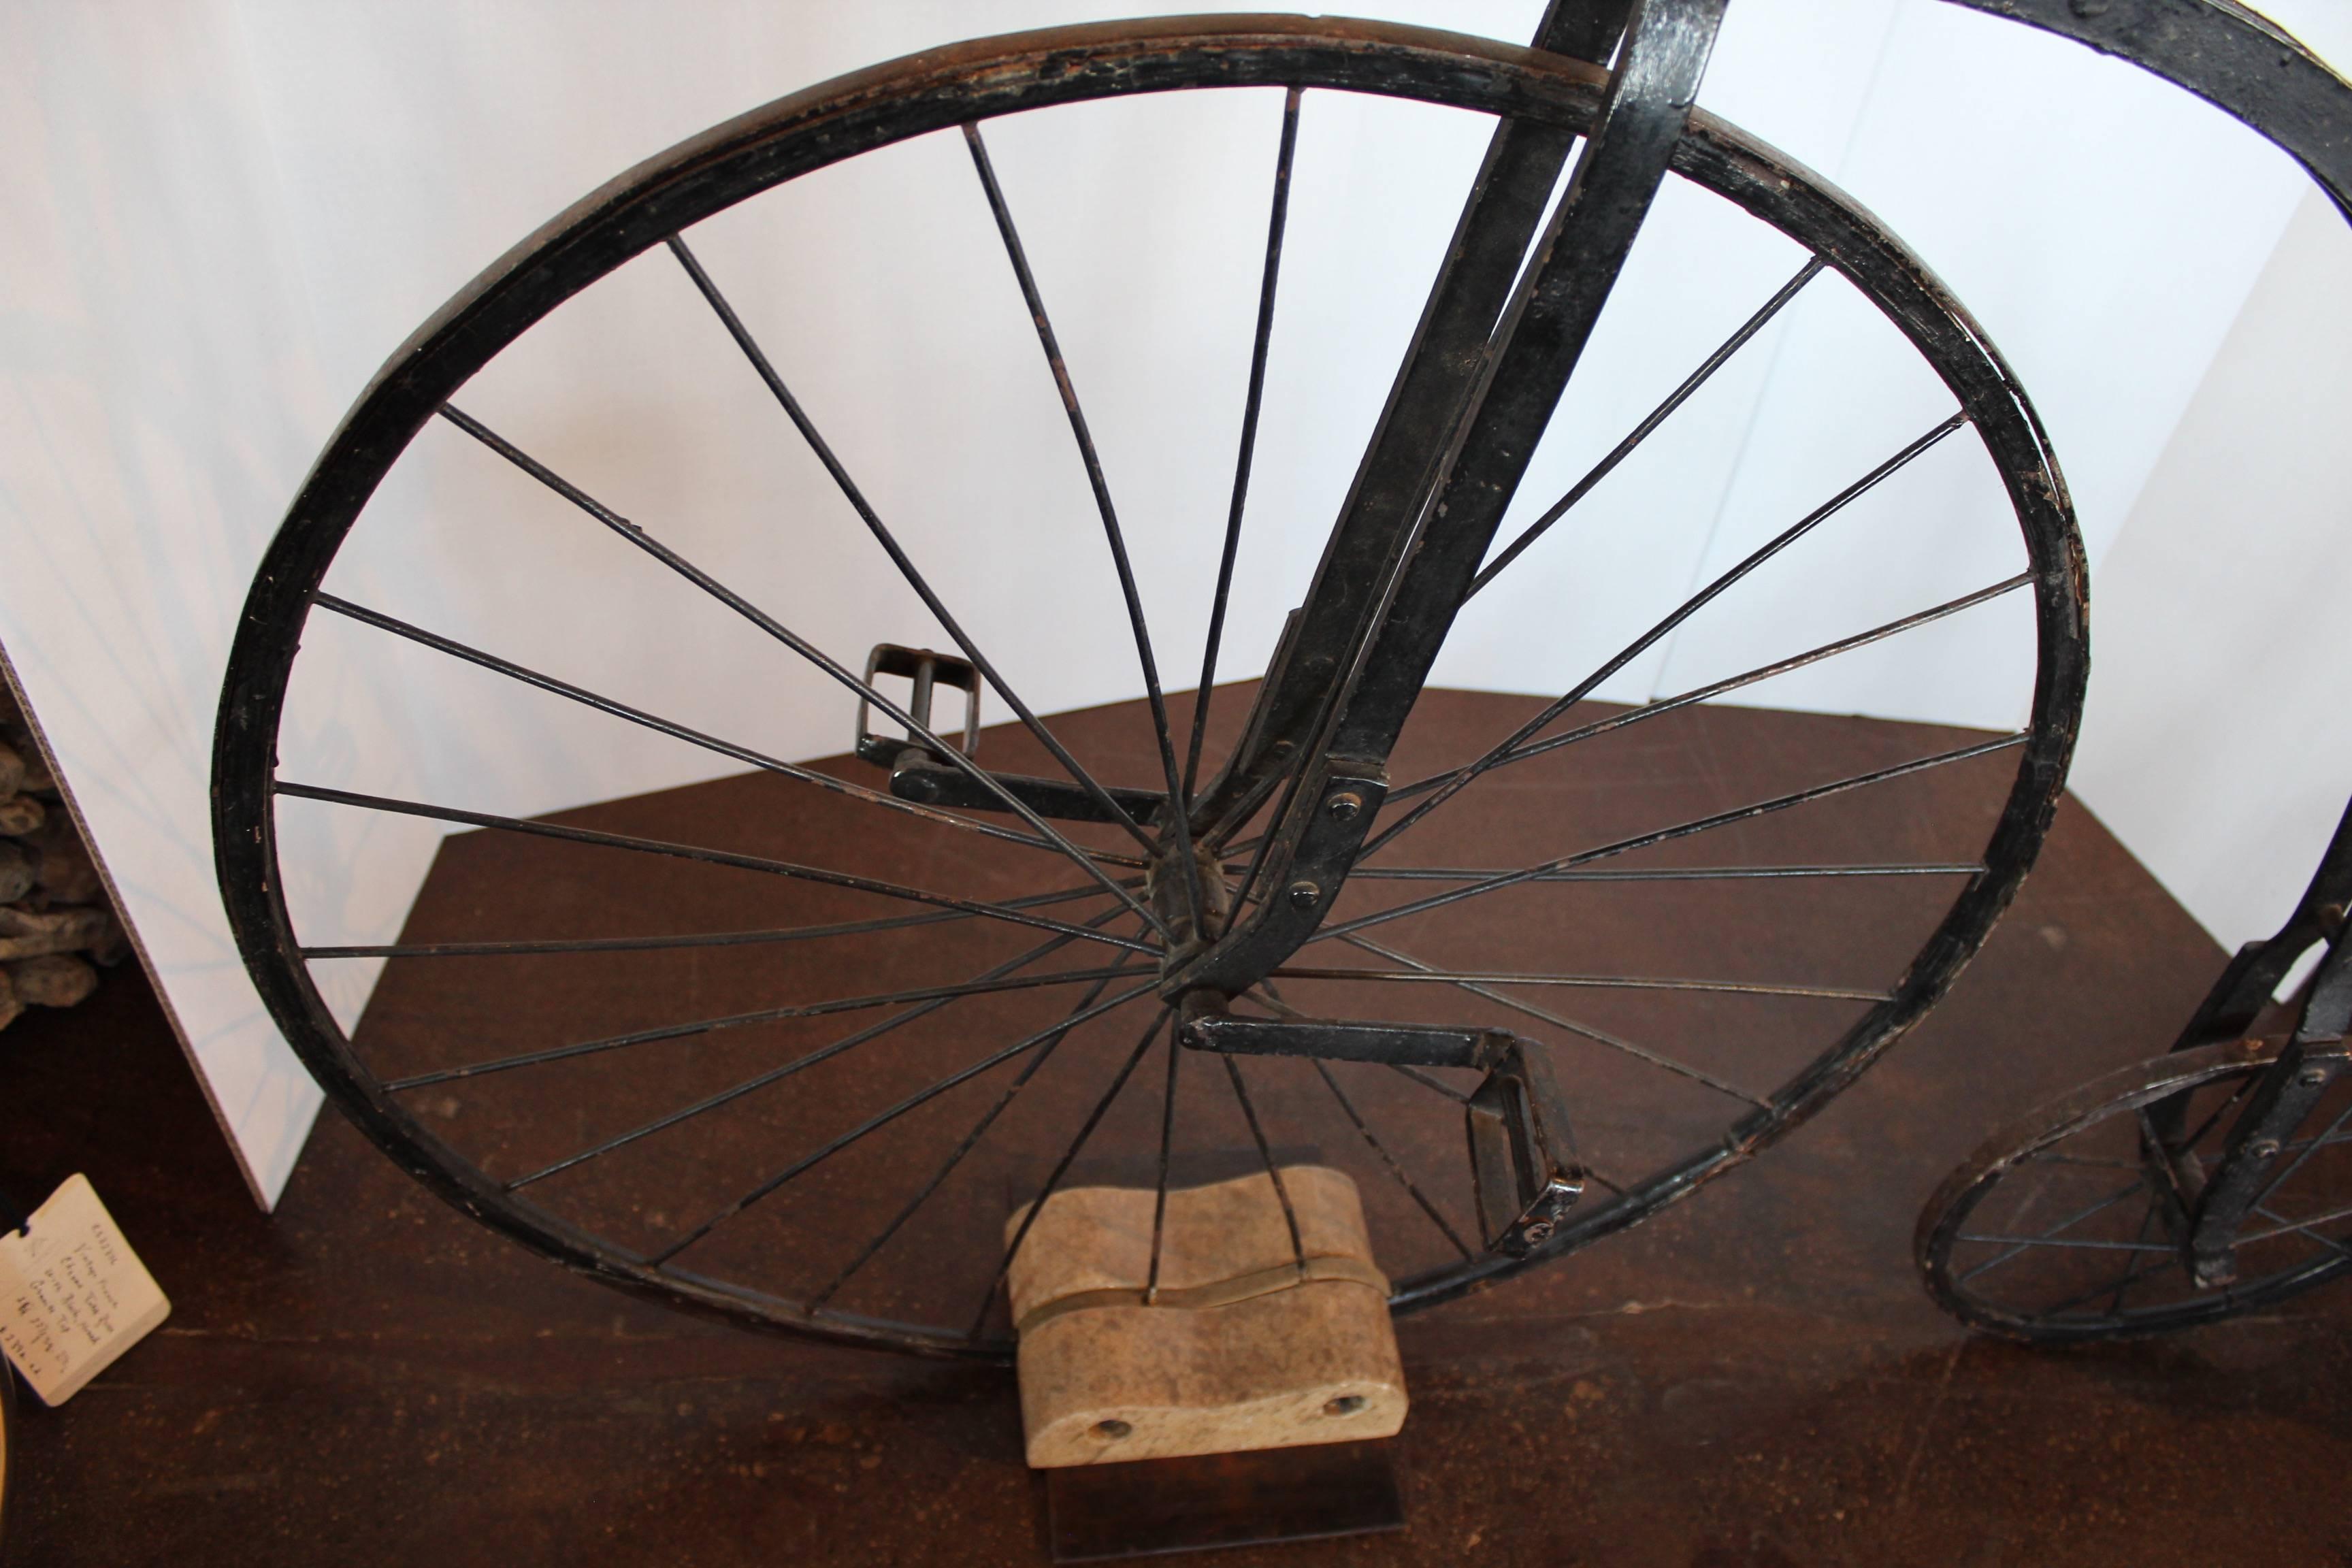 Early 20th Century British High Wheeler Bicycle as Mount Decor, circa 1900